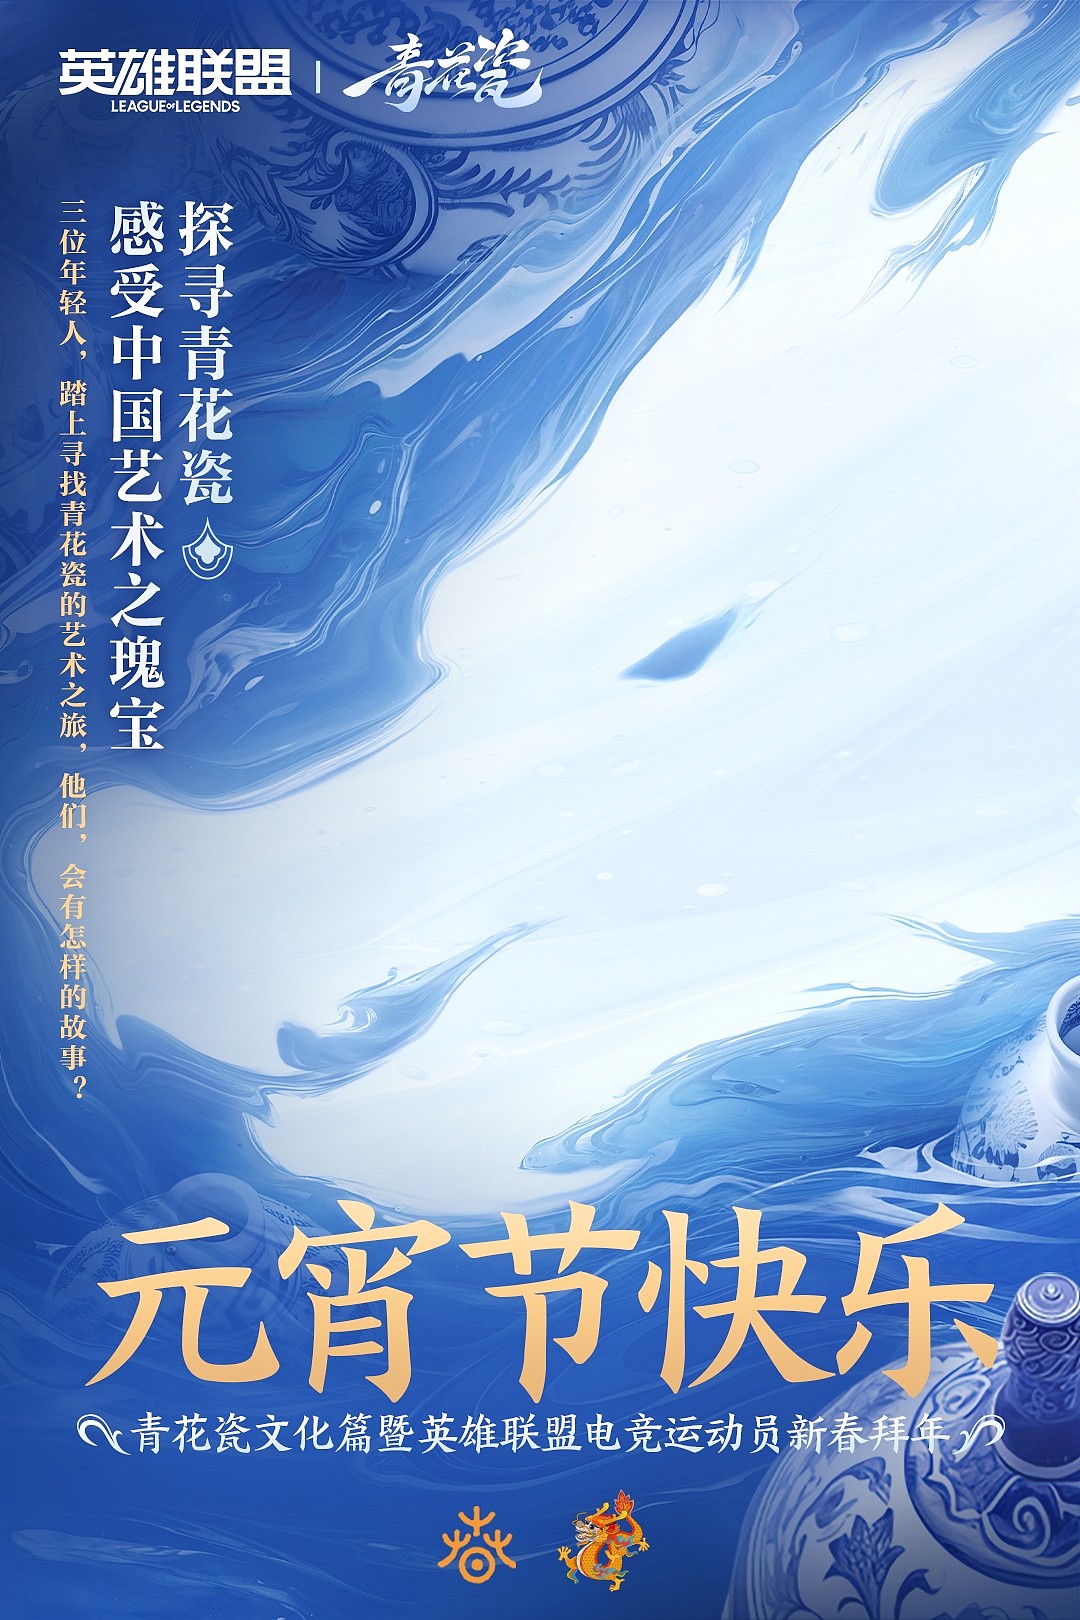 LOL加入“你好 中国元宵灯会”：和大家一起探寻青花瓷文化的艺术魅力 - 1